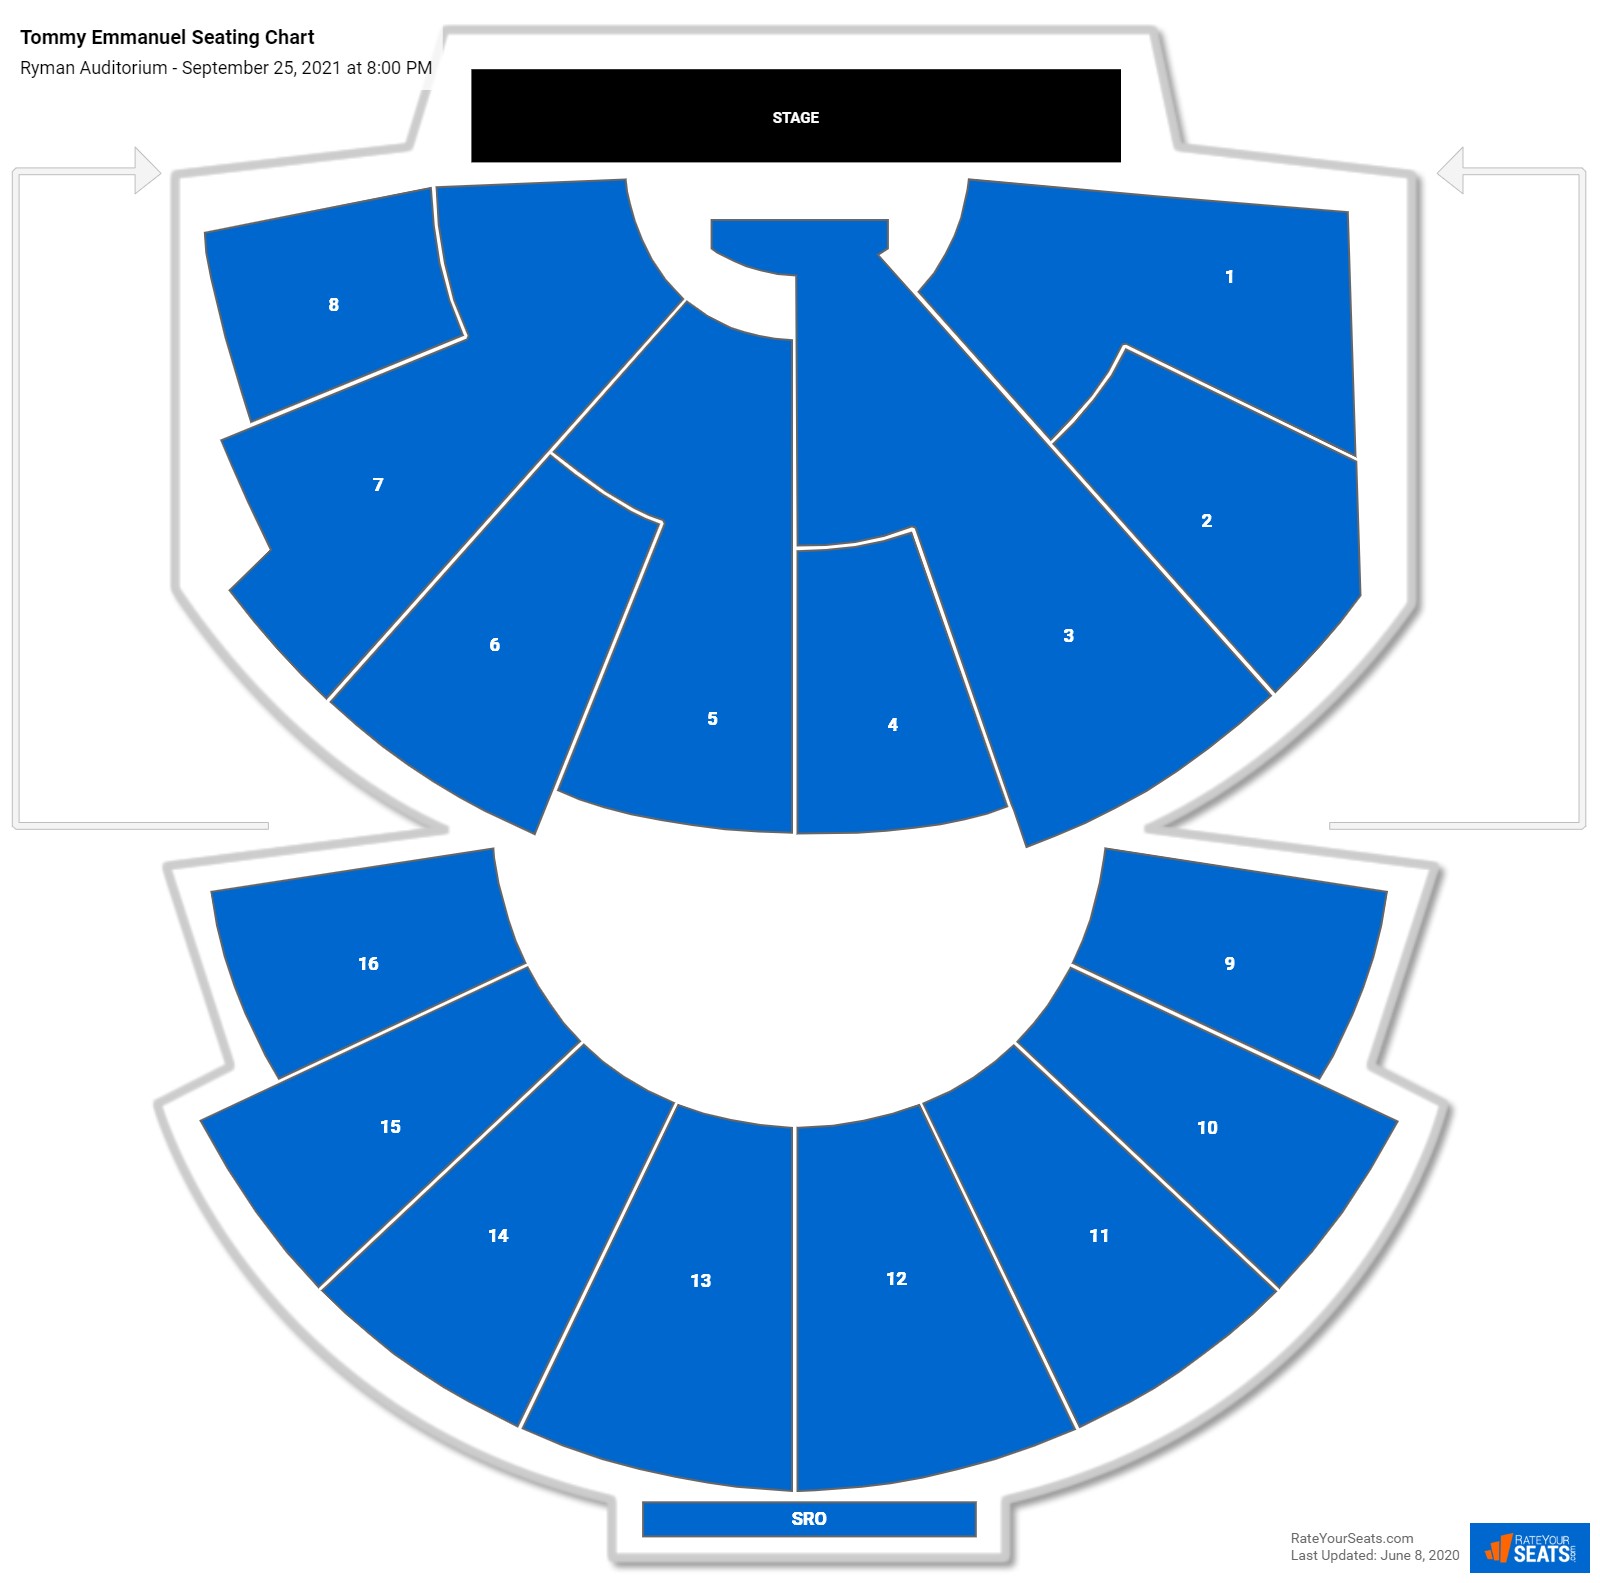 Ryman Auditorium Seating Chart